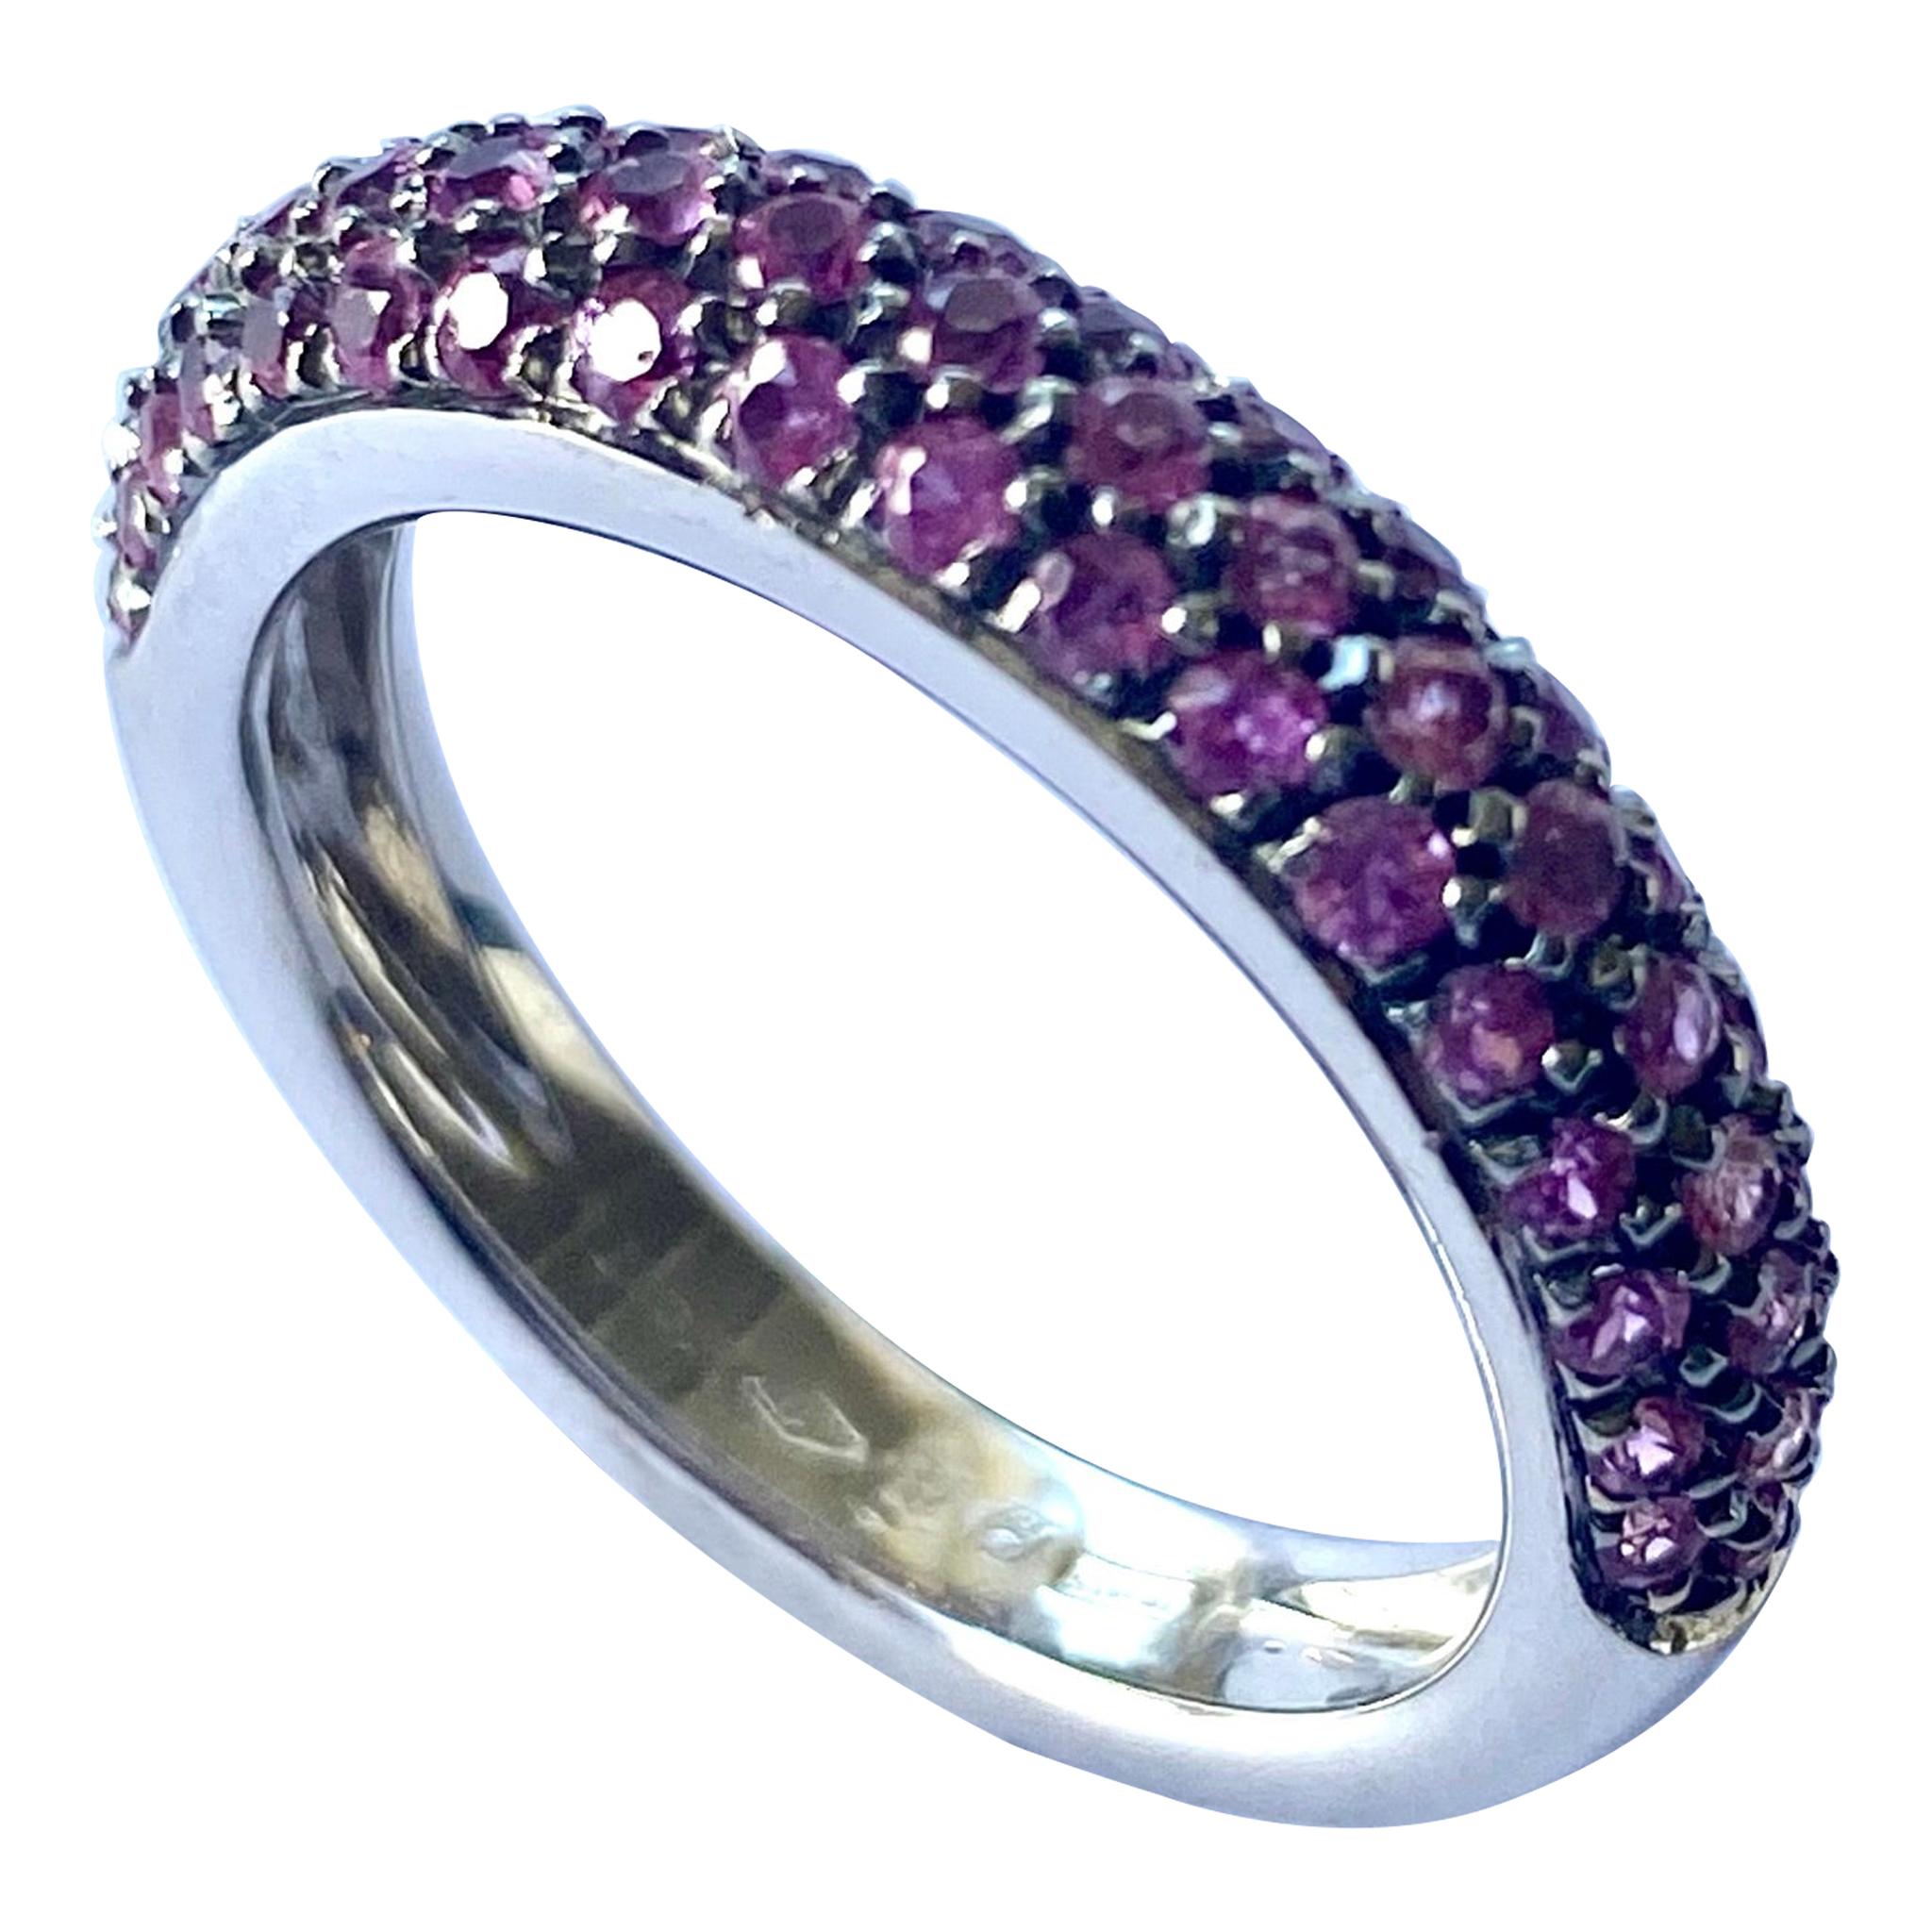 Leo Pizzo Pink Sapphires White Gold Ring, Model: Pavé